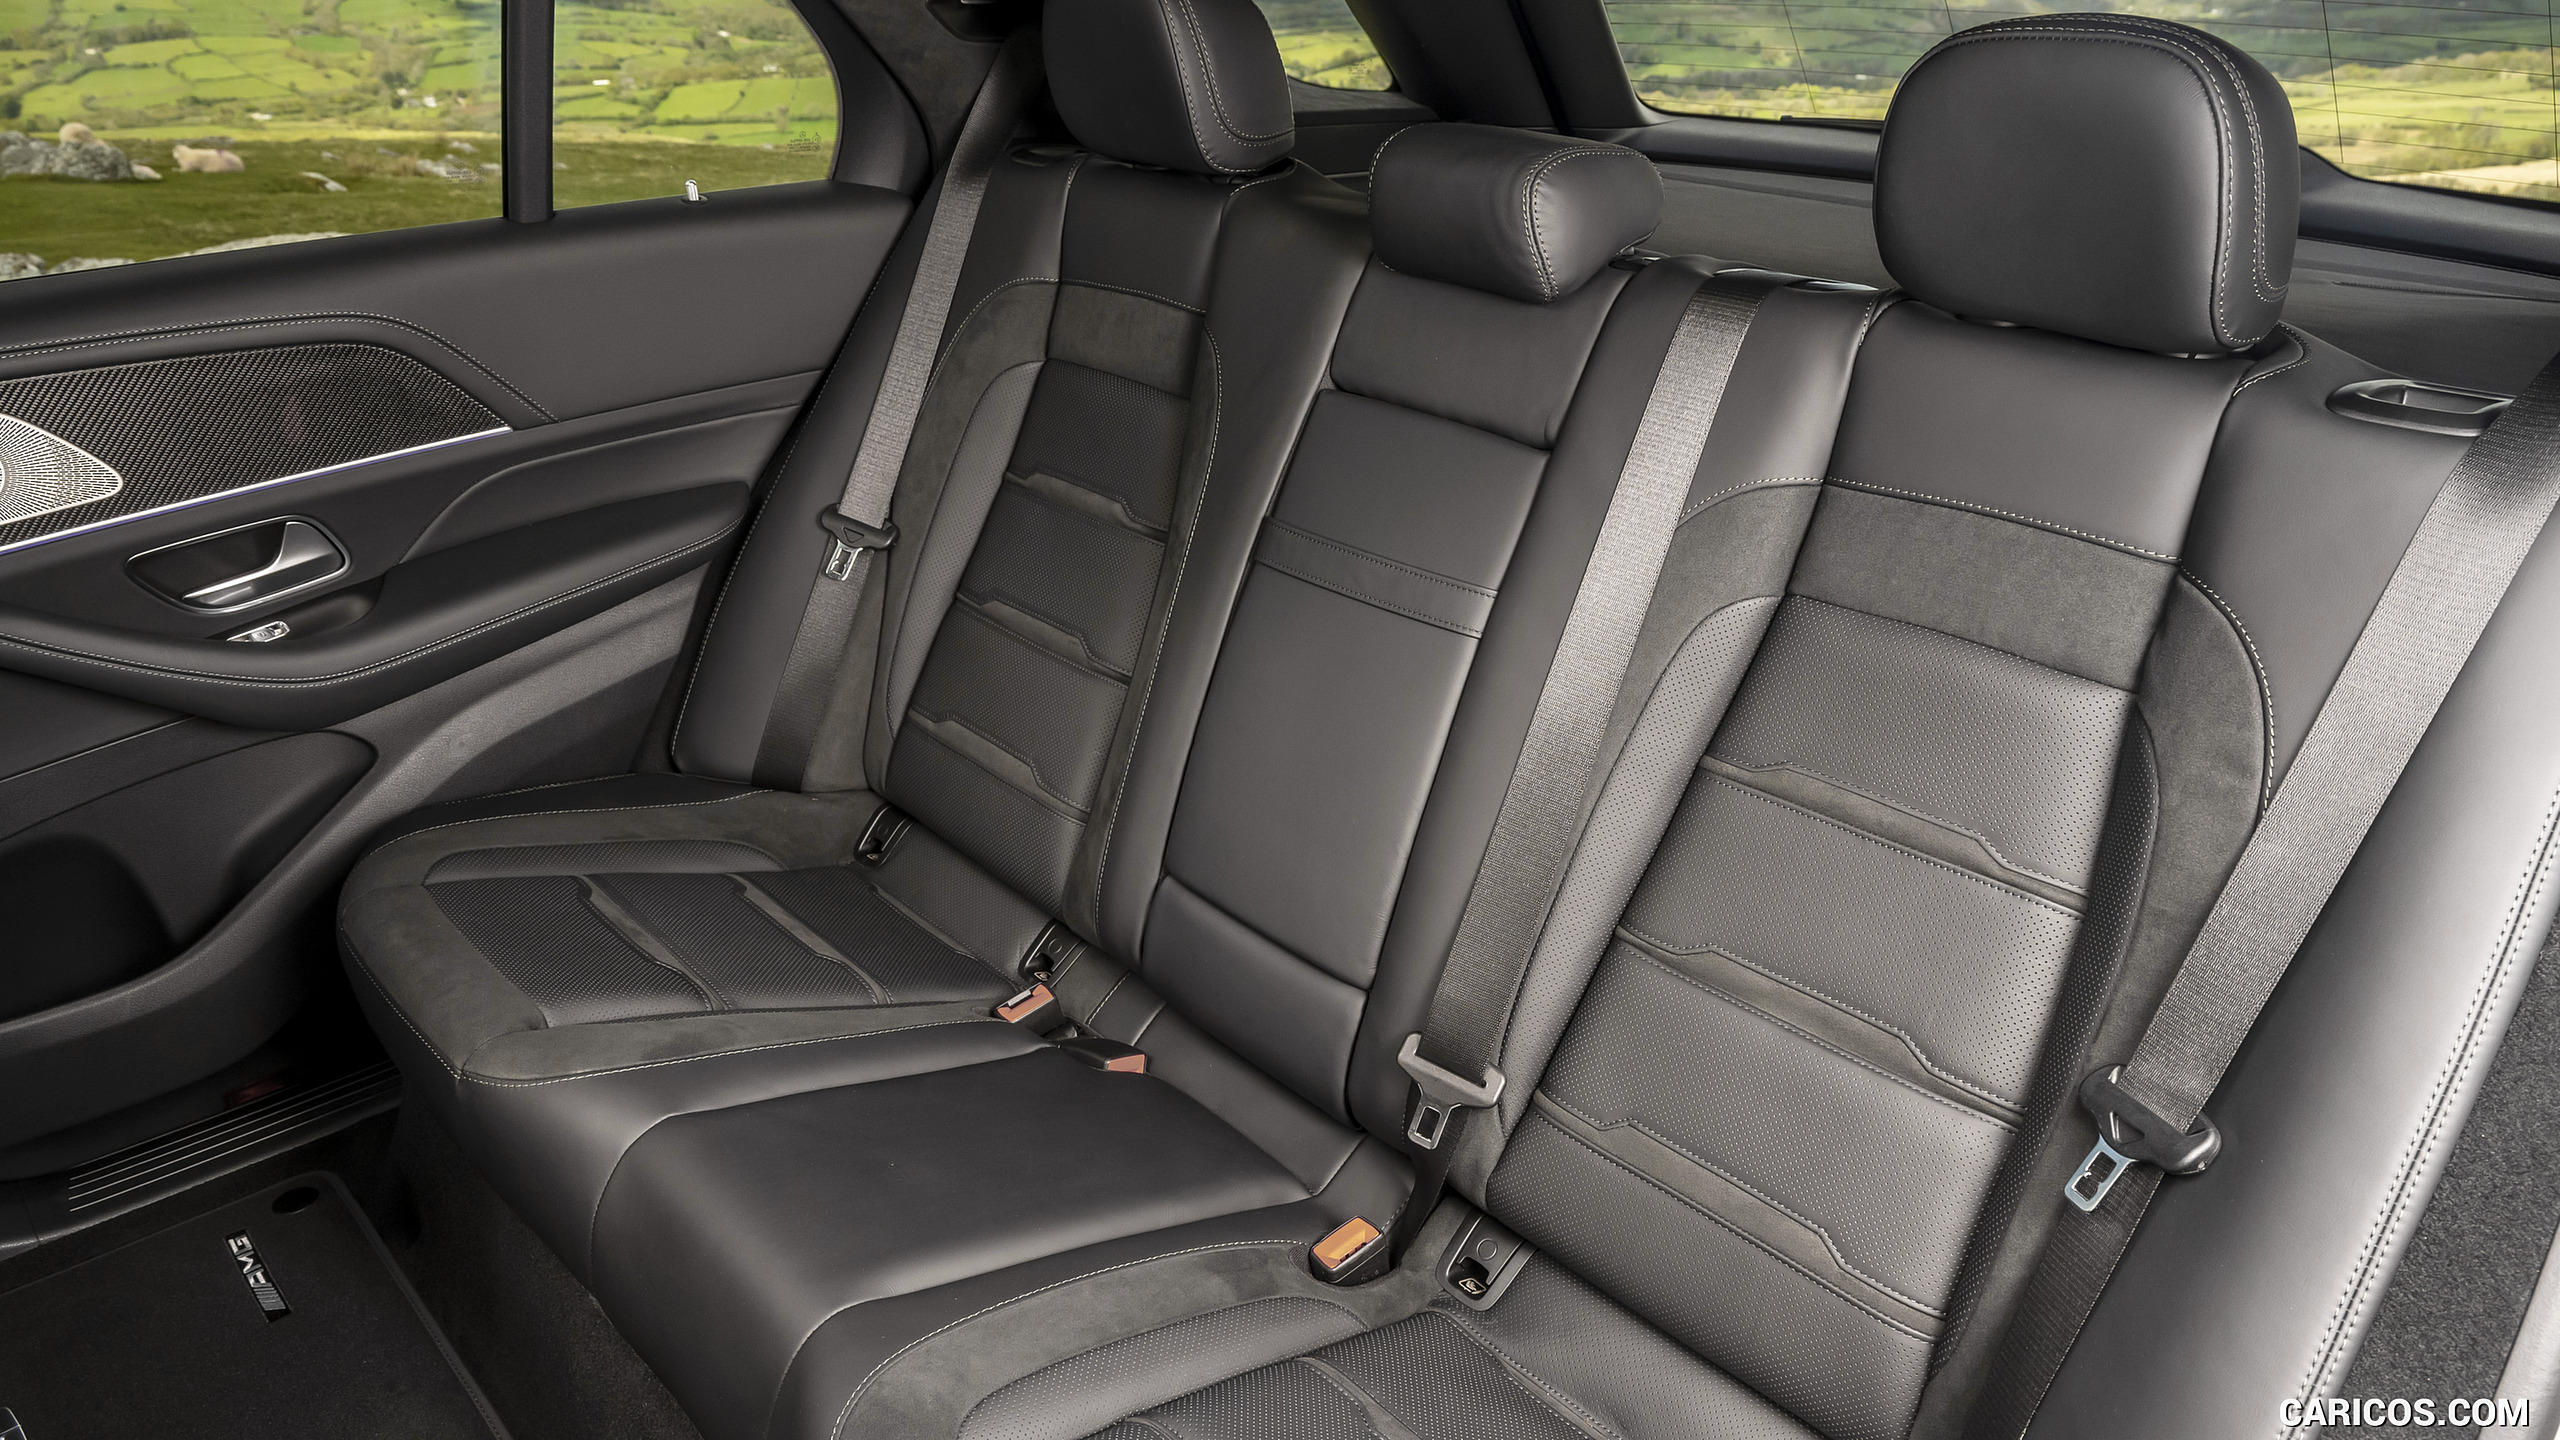 2021 Mercedes-AMG GLE 63 S 4MATIC (UK-Spec) - Interior, Rear Seats, #178 of 187